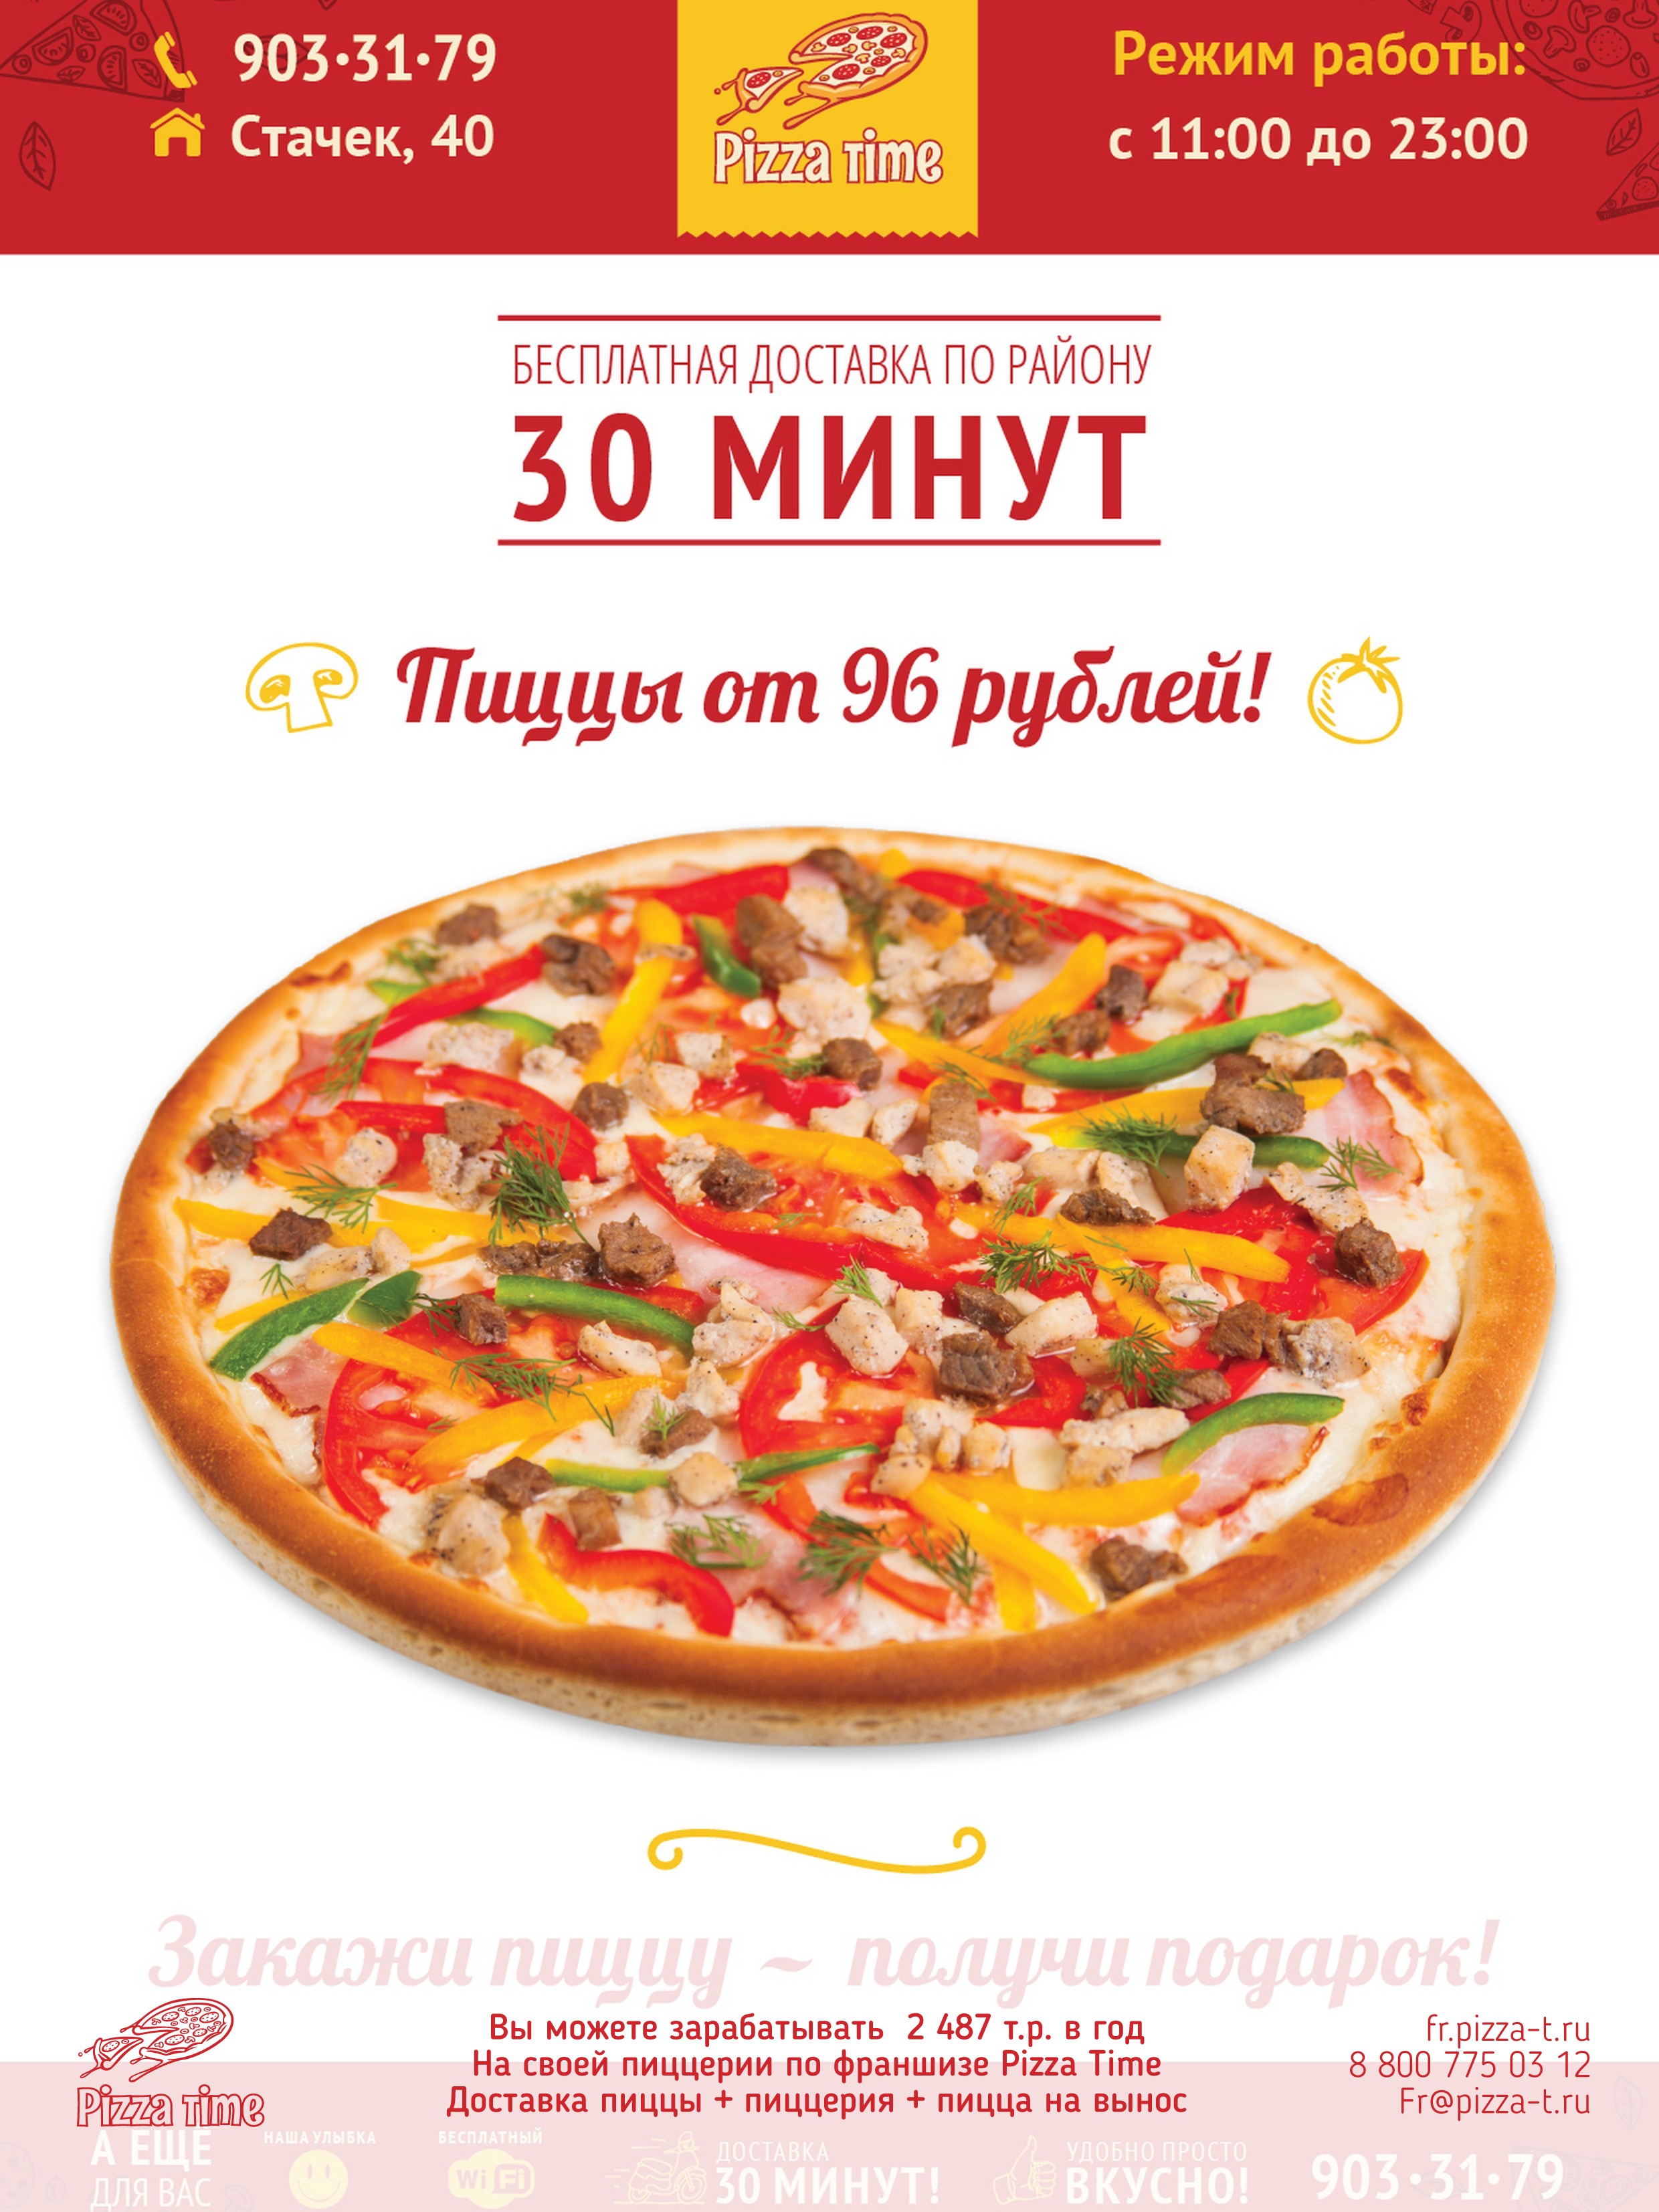 Франшиза пиццерии Pizza Time в городе Санкт-Петербург, фото 2, телефон продавца: +7 (800) 775-03-12